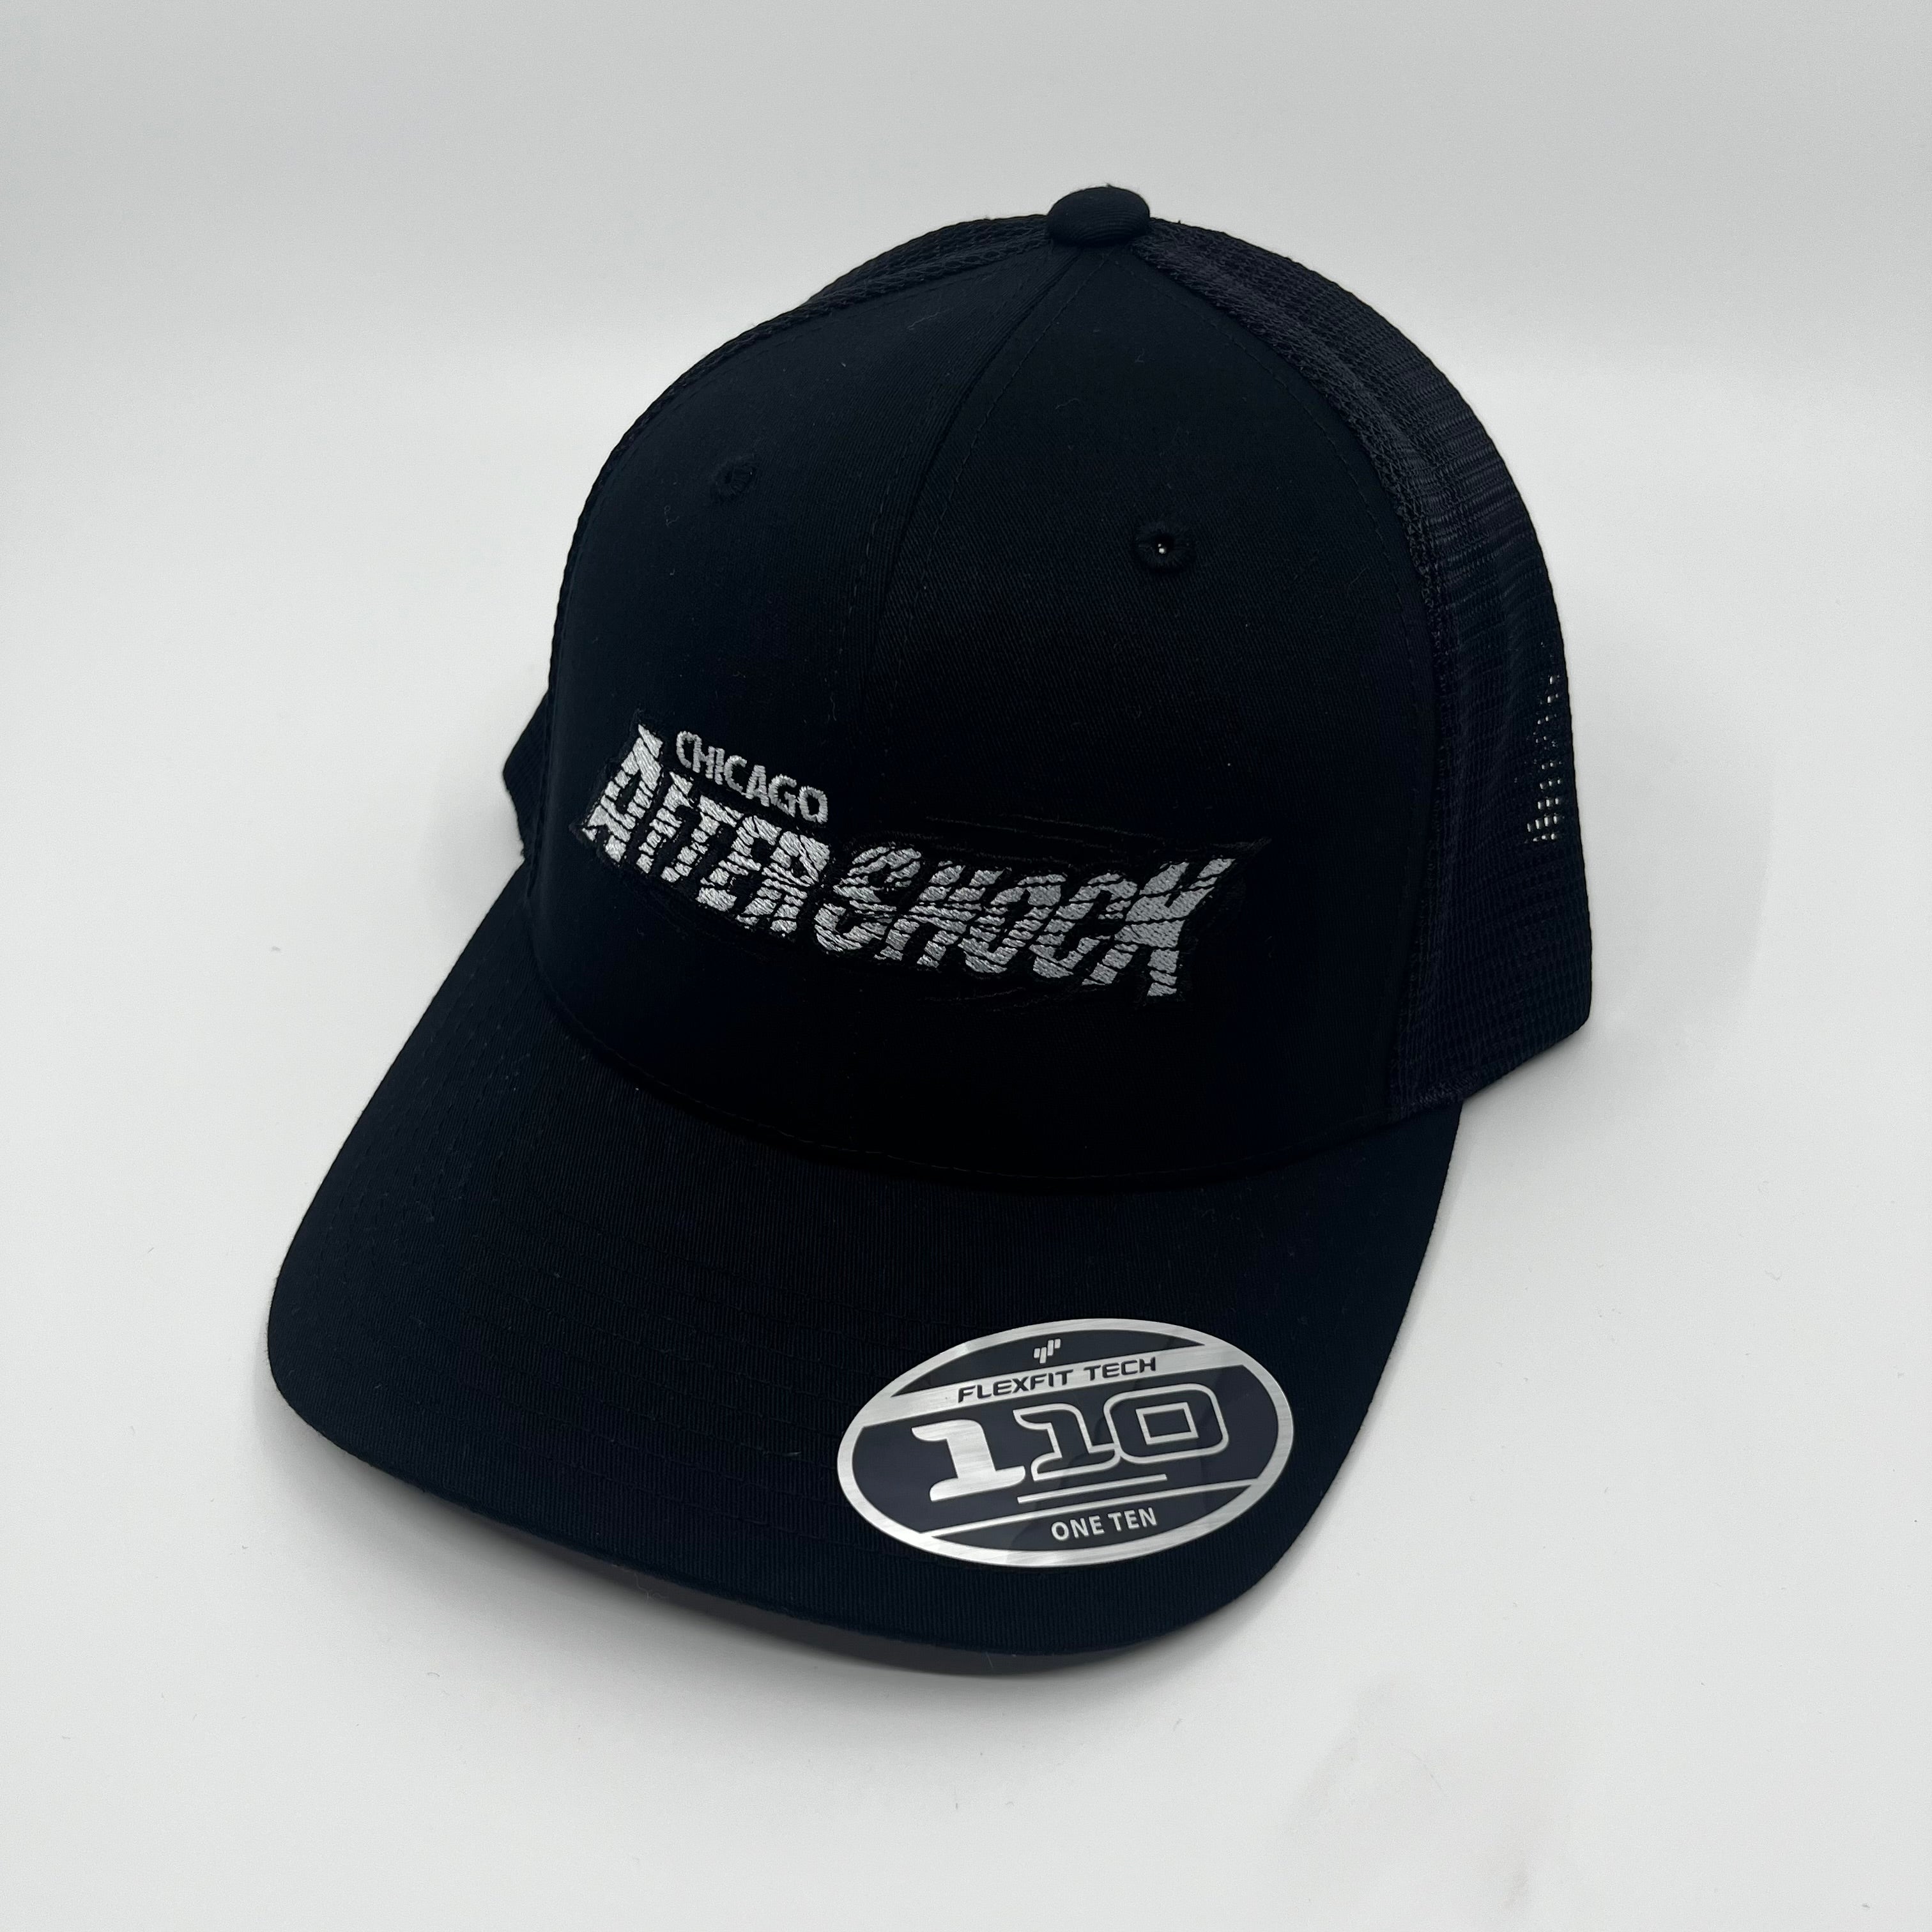 AFTERSHOCK SNAPBACK HATS